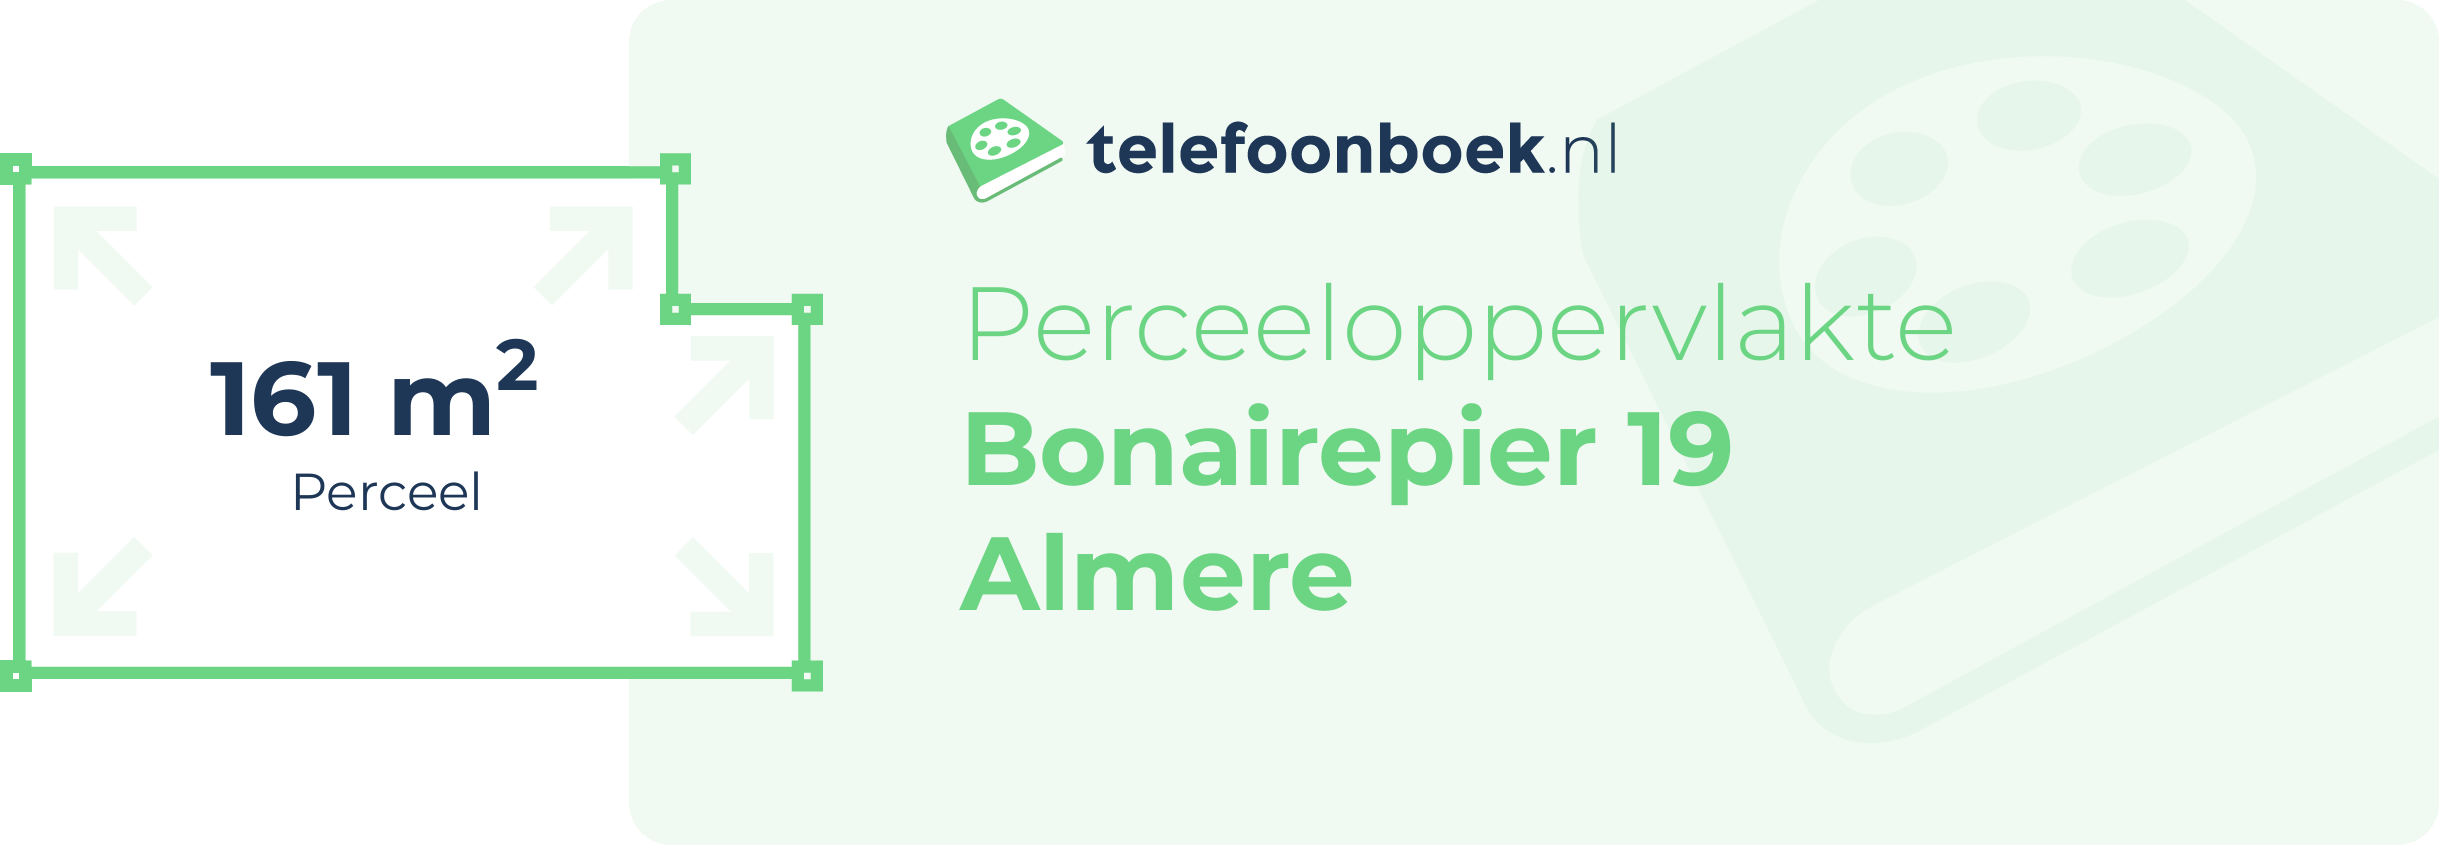 Perceeloppervlakte Bonairepier 19 Almere